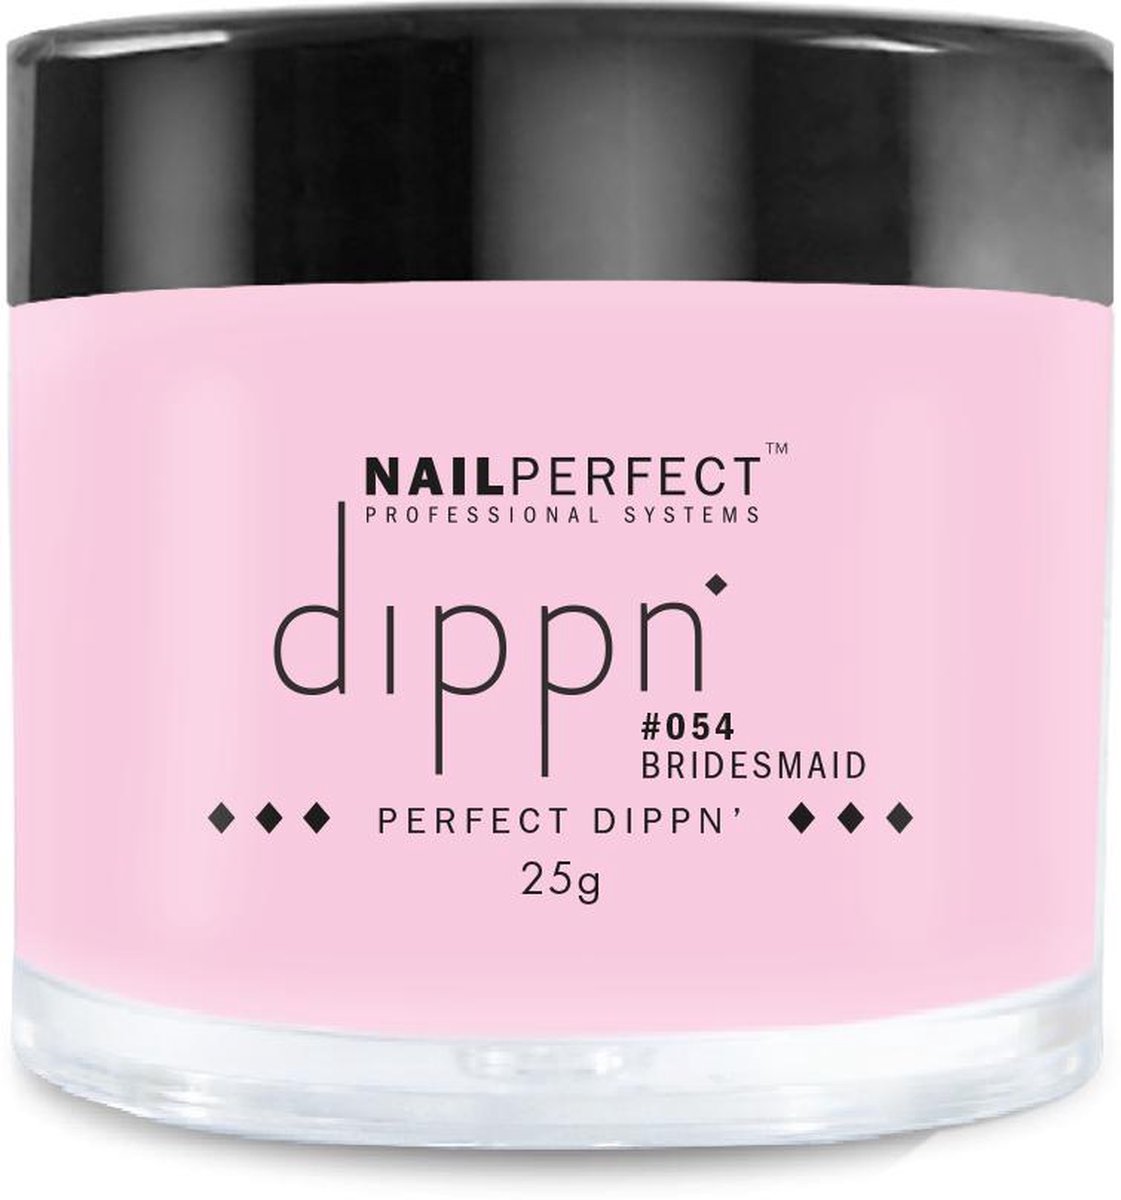 NailPerfect Dippn' acryl poeder' #054 Bridesmaid